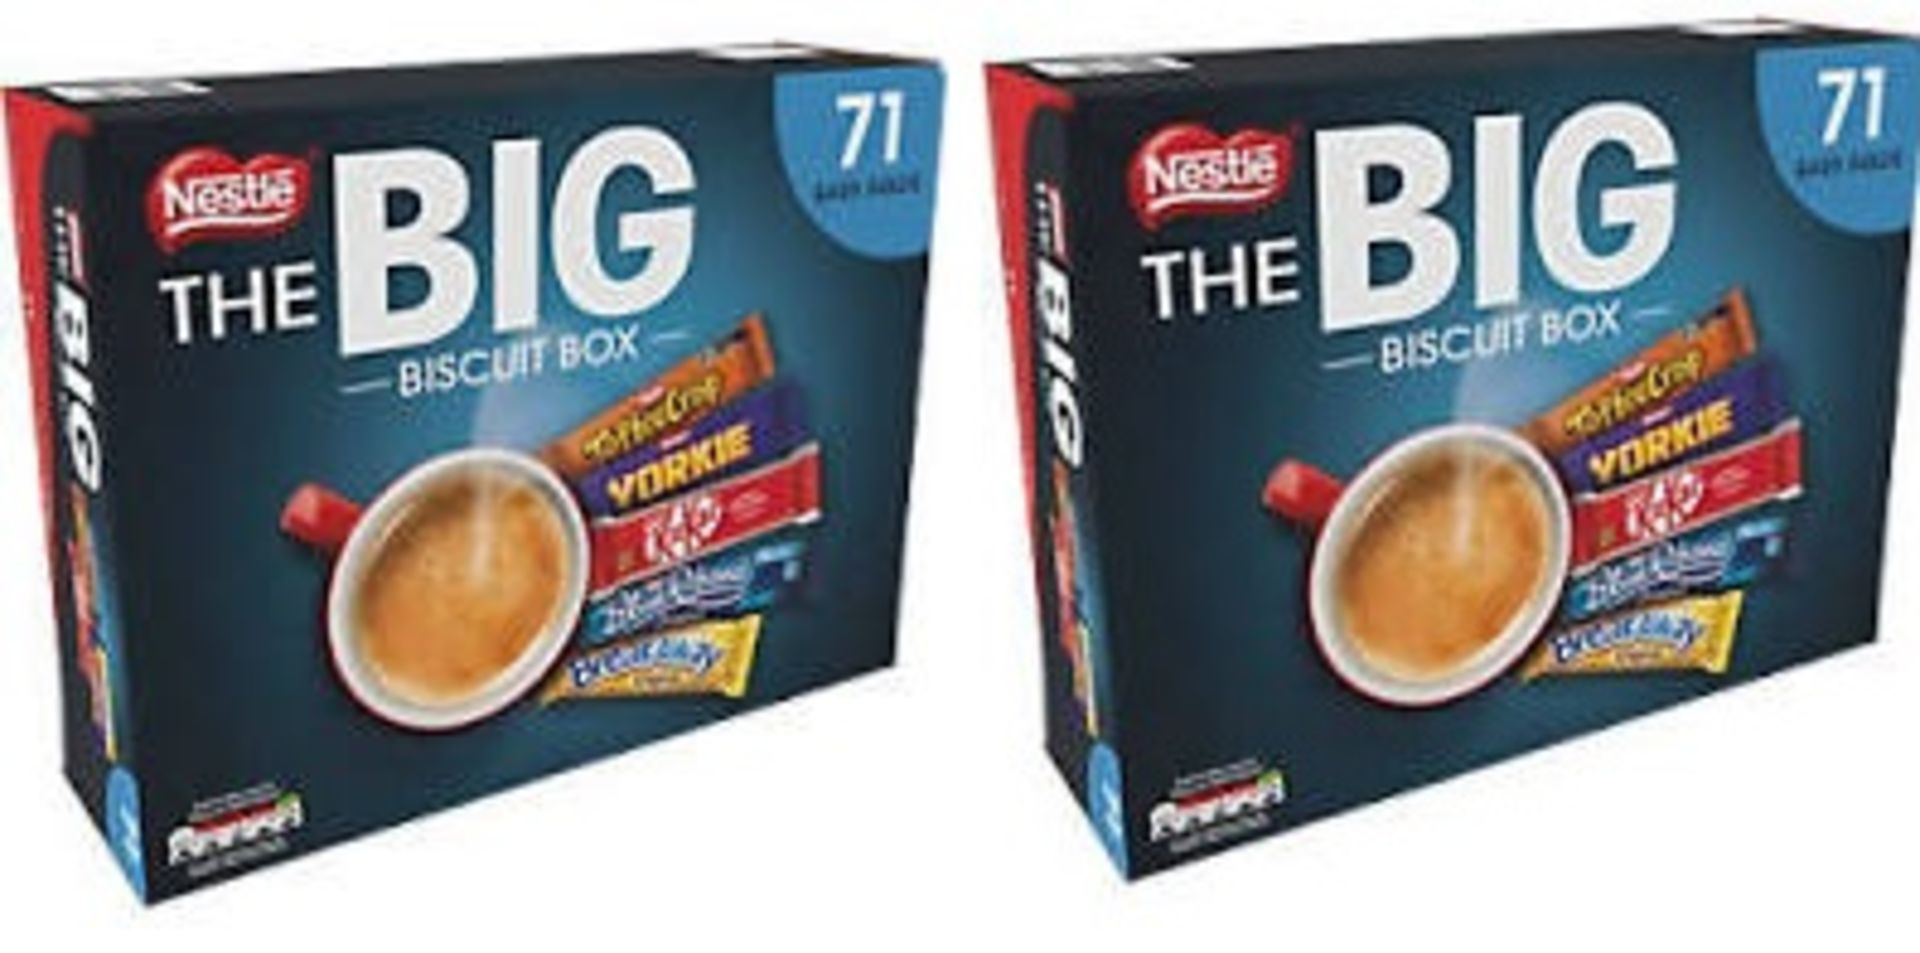 + VAT Brand New 142 Biscuits (2 x The Big Biscuit Box) Including Toffee Crisp, Yorkie, KitKat, Blue